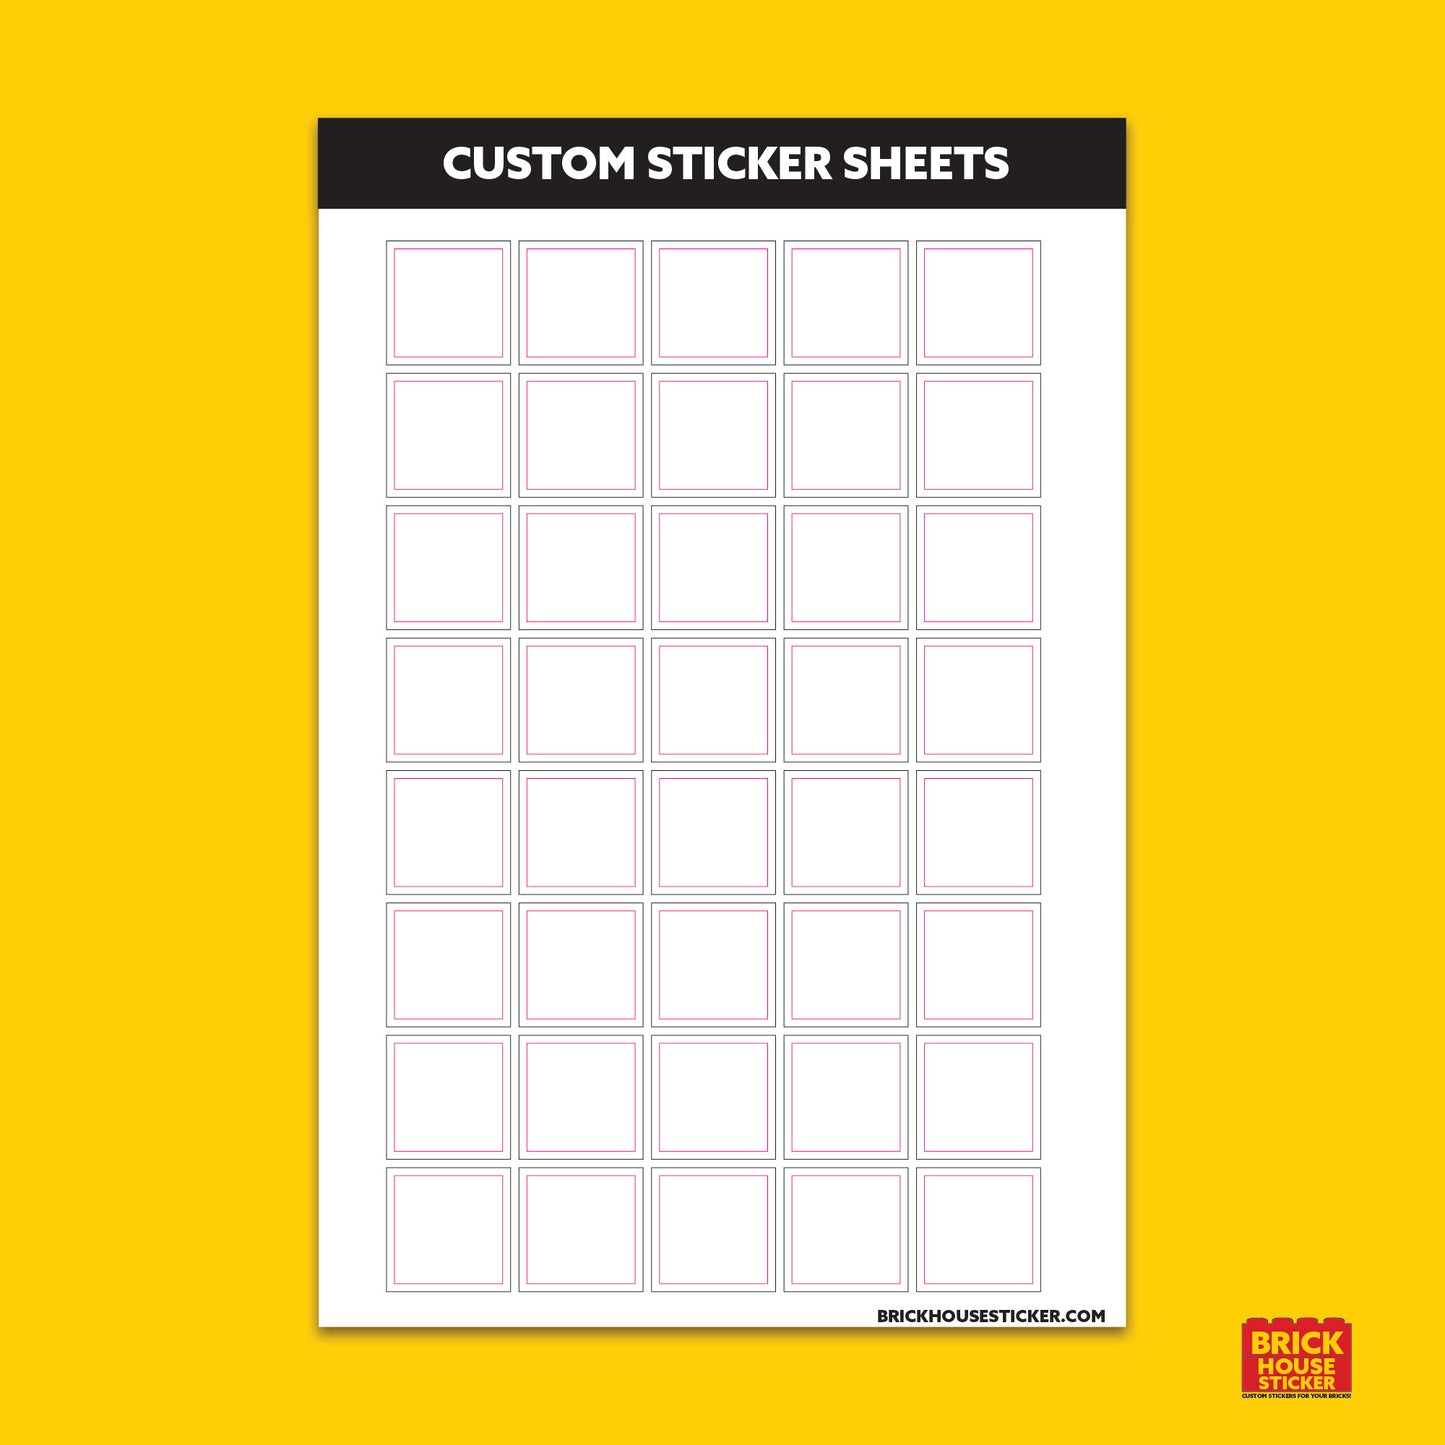 Single Brick stickers on one sheet